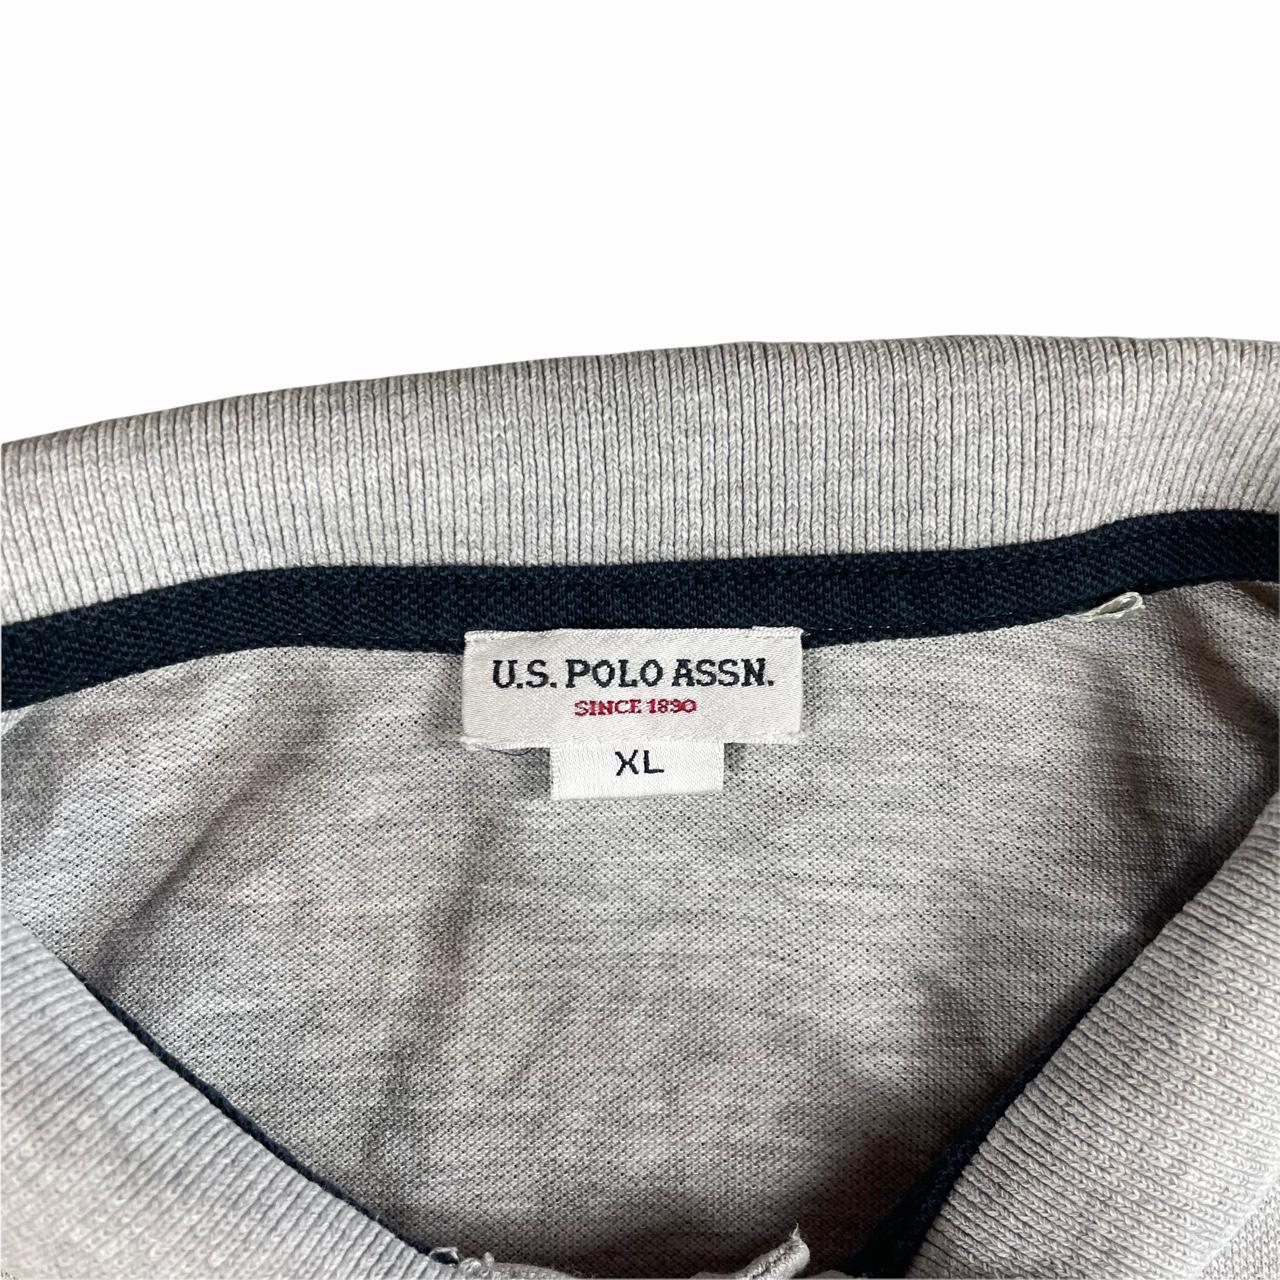 Product Image 3 - U.S Polo ASSN Grey Black